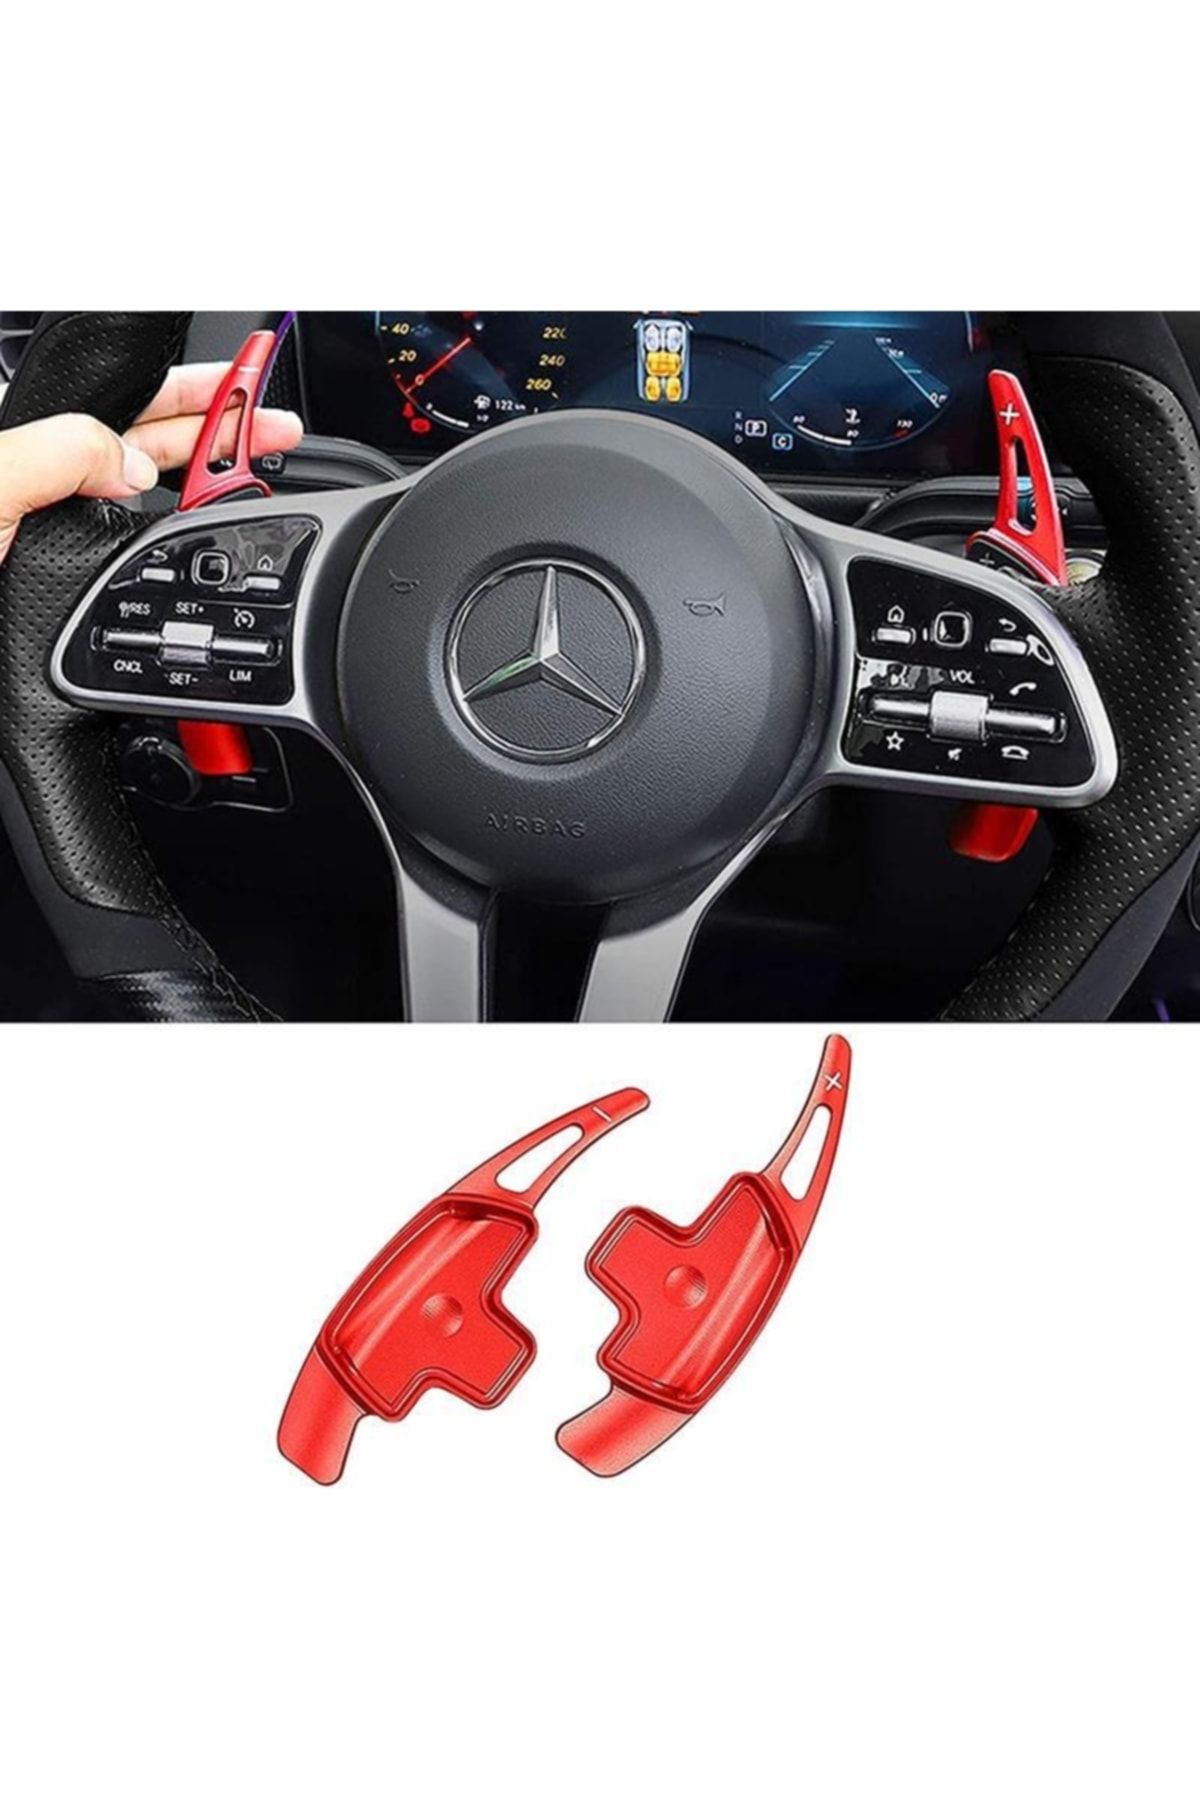 Mercedes C Class F1 Kulakcık Kırmızı Peaddle Shift 2015 +